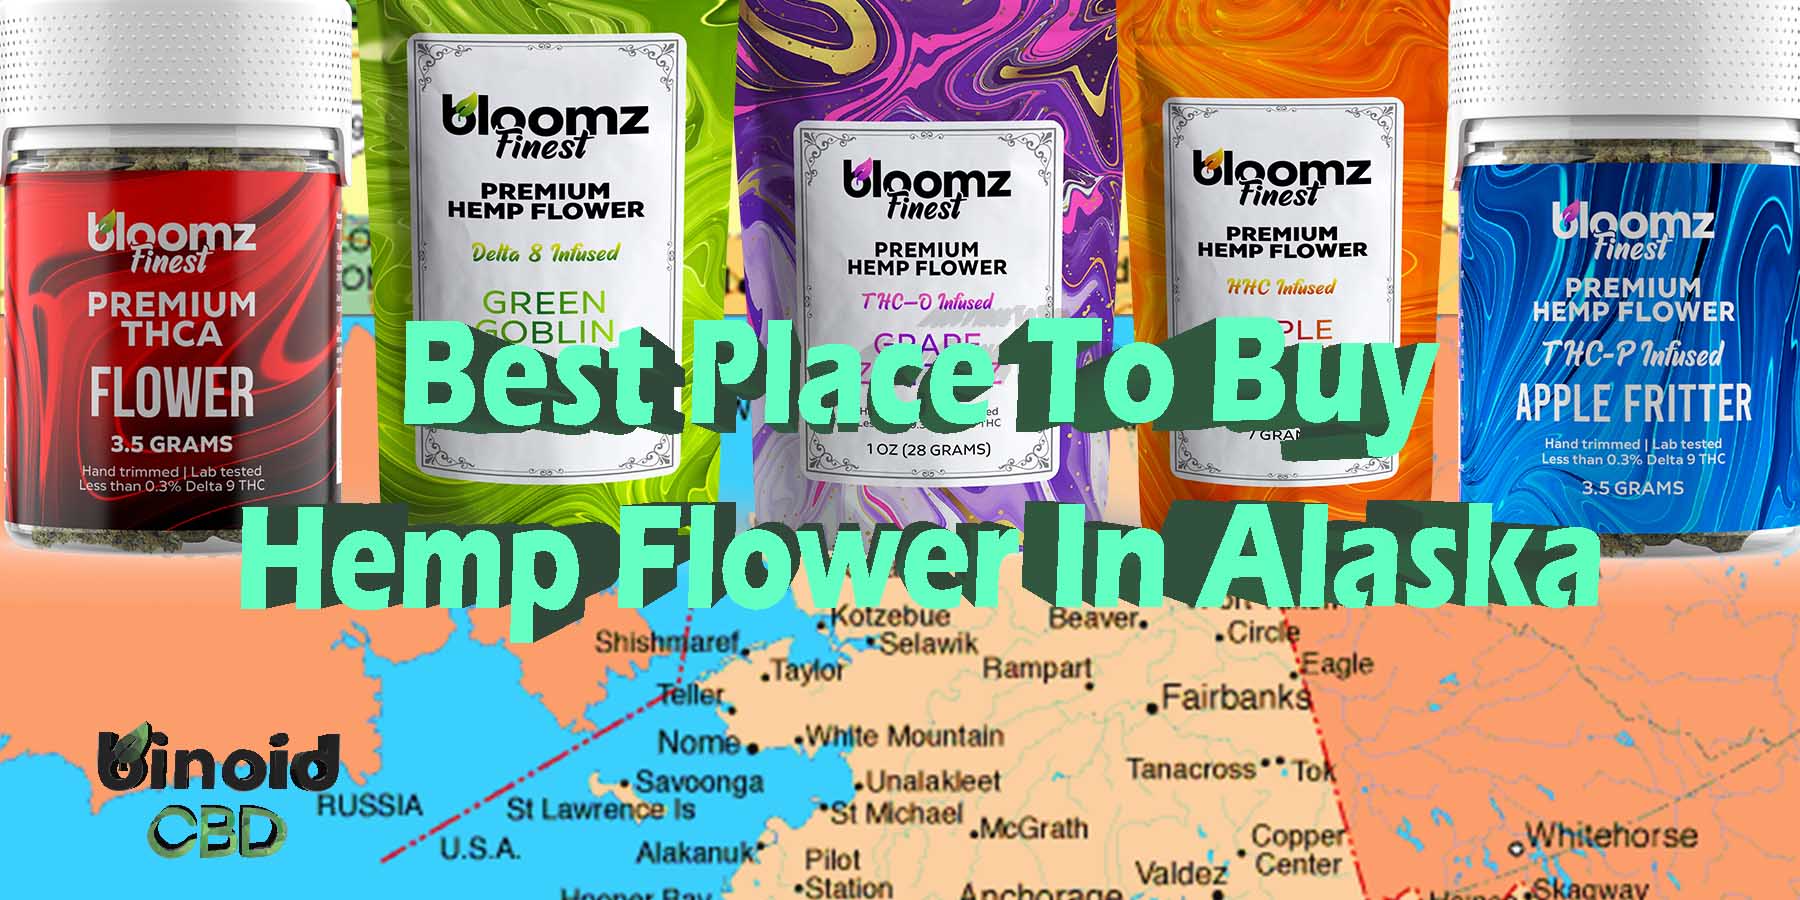 Buy Hemp Flower Alaska Joints PreRolls Get Online Near Me For Sale Best Brand Strongest Real Legal Store Shop Reddit